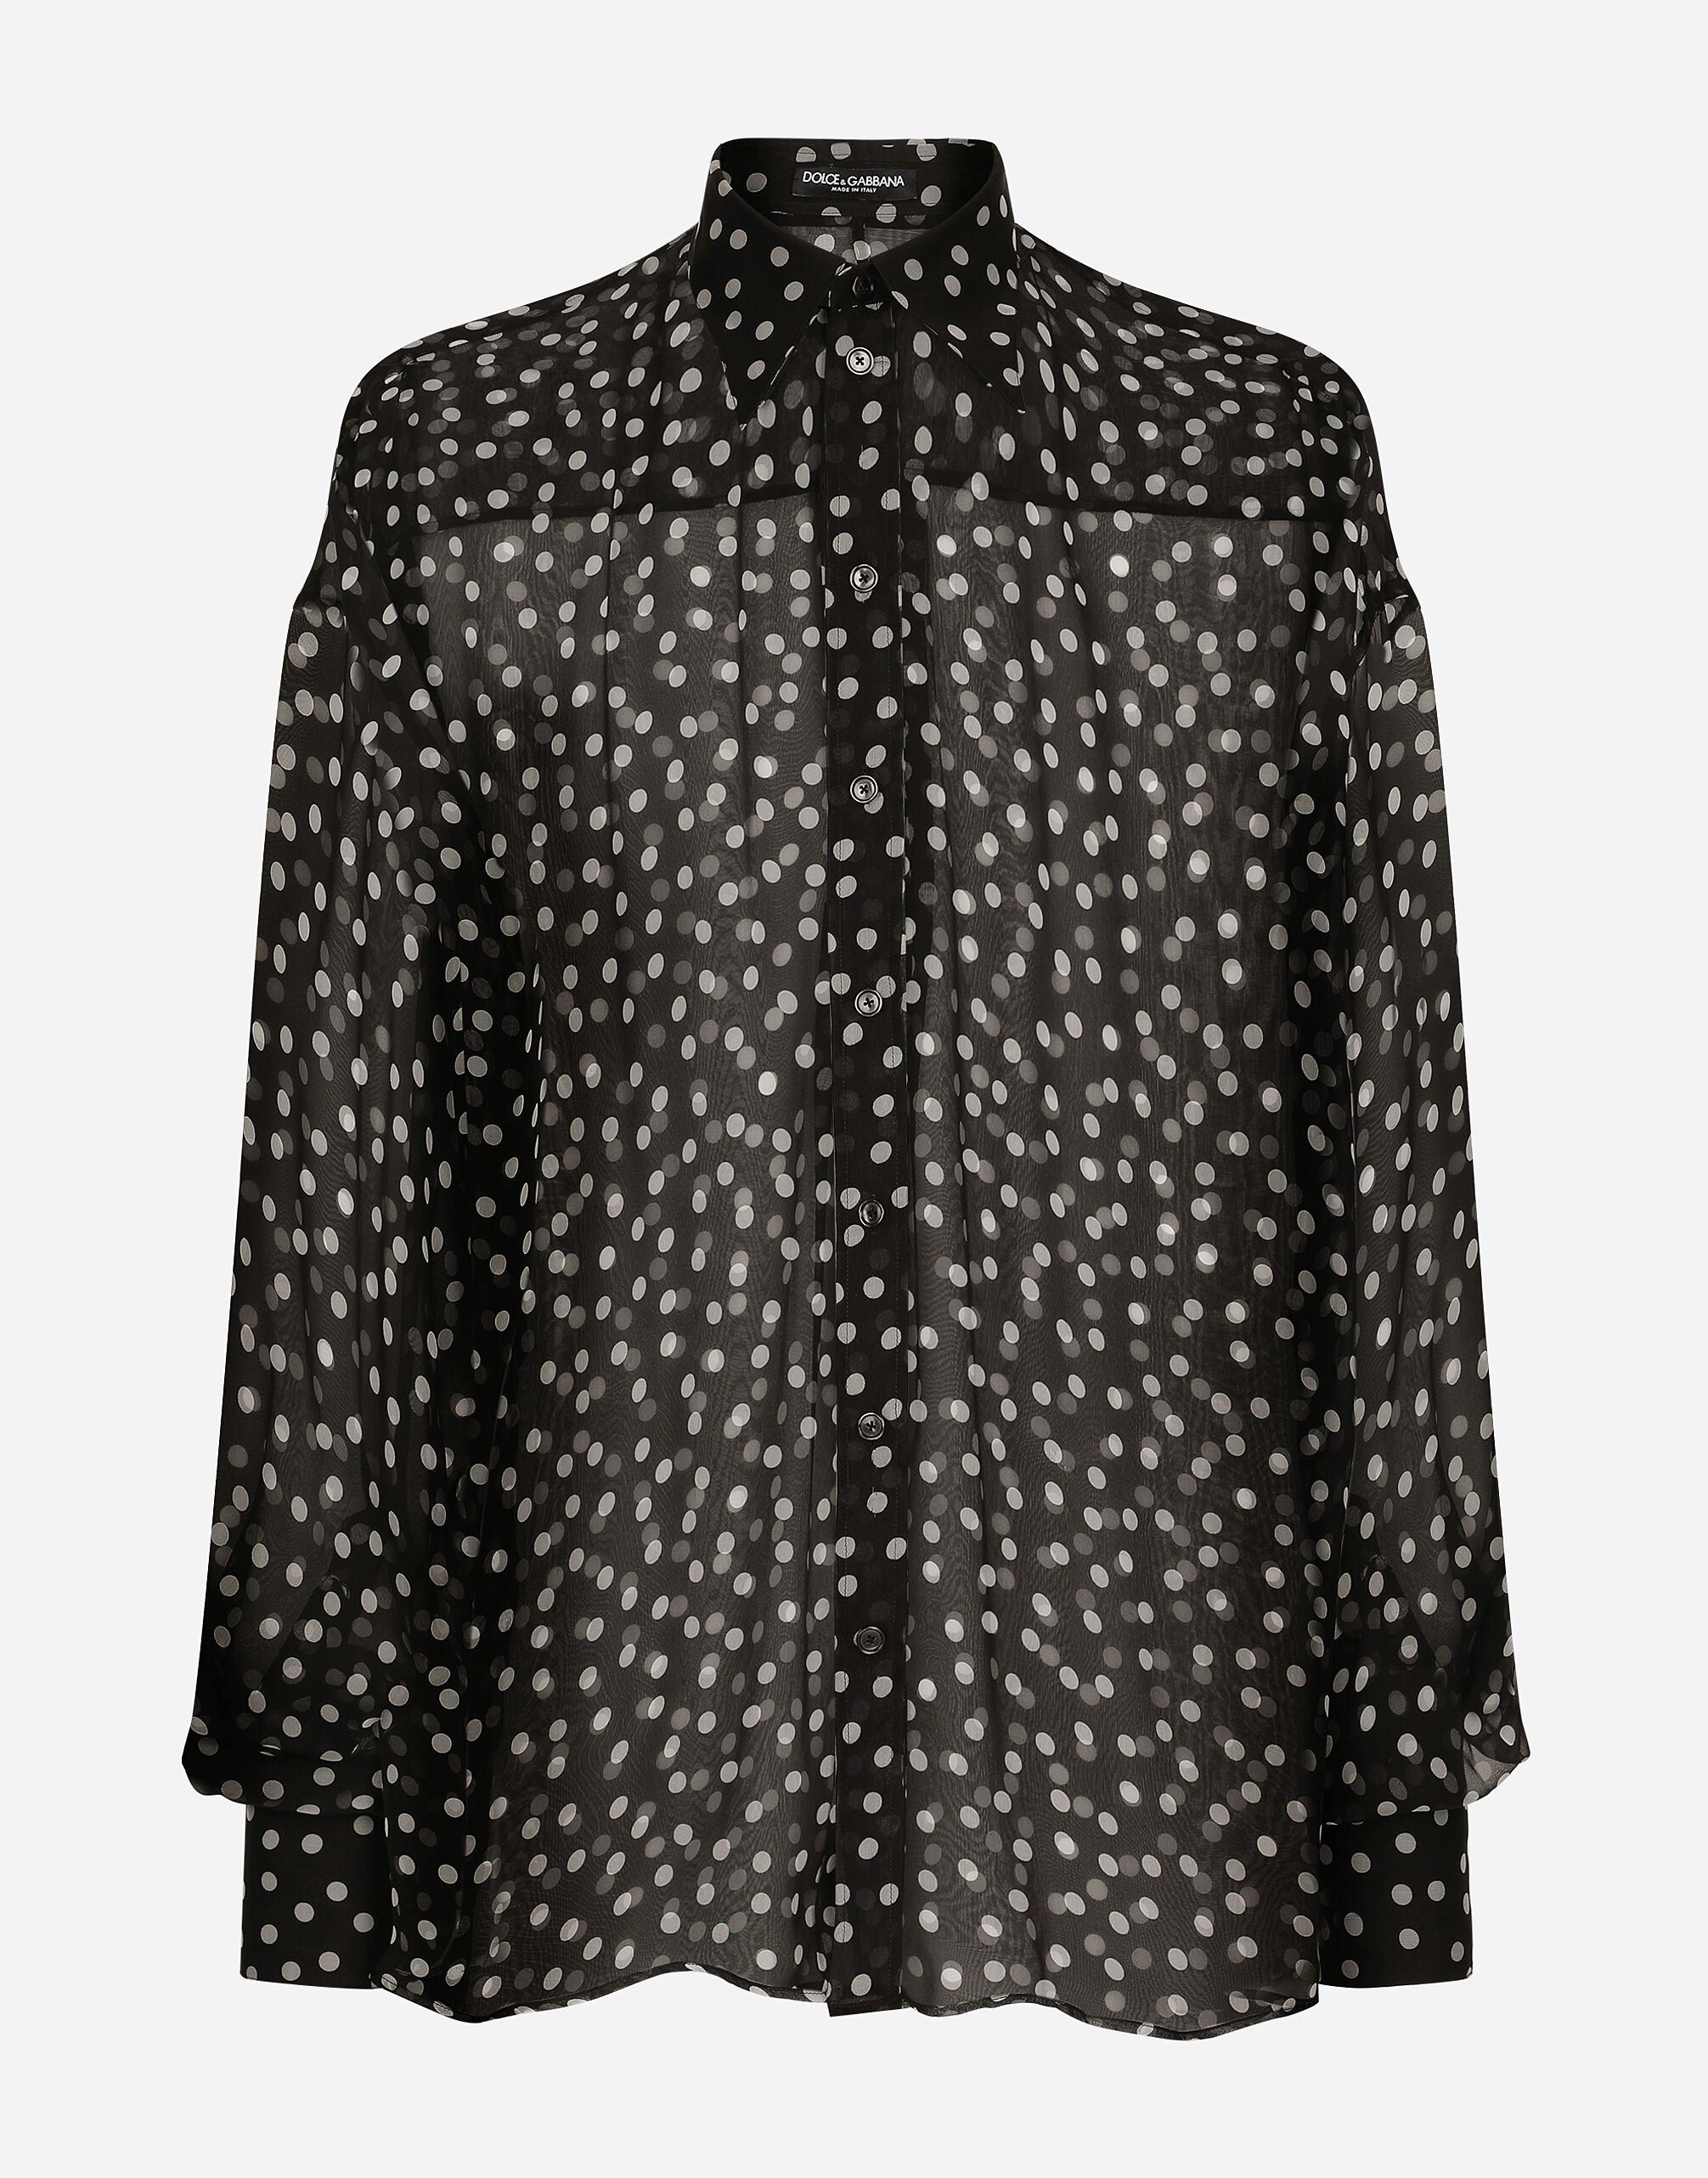 Dolce & Gabbana Super-oversize silk chiffon shirt with polka-dot print Print G5IF1THI1QA